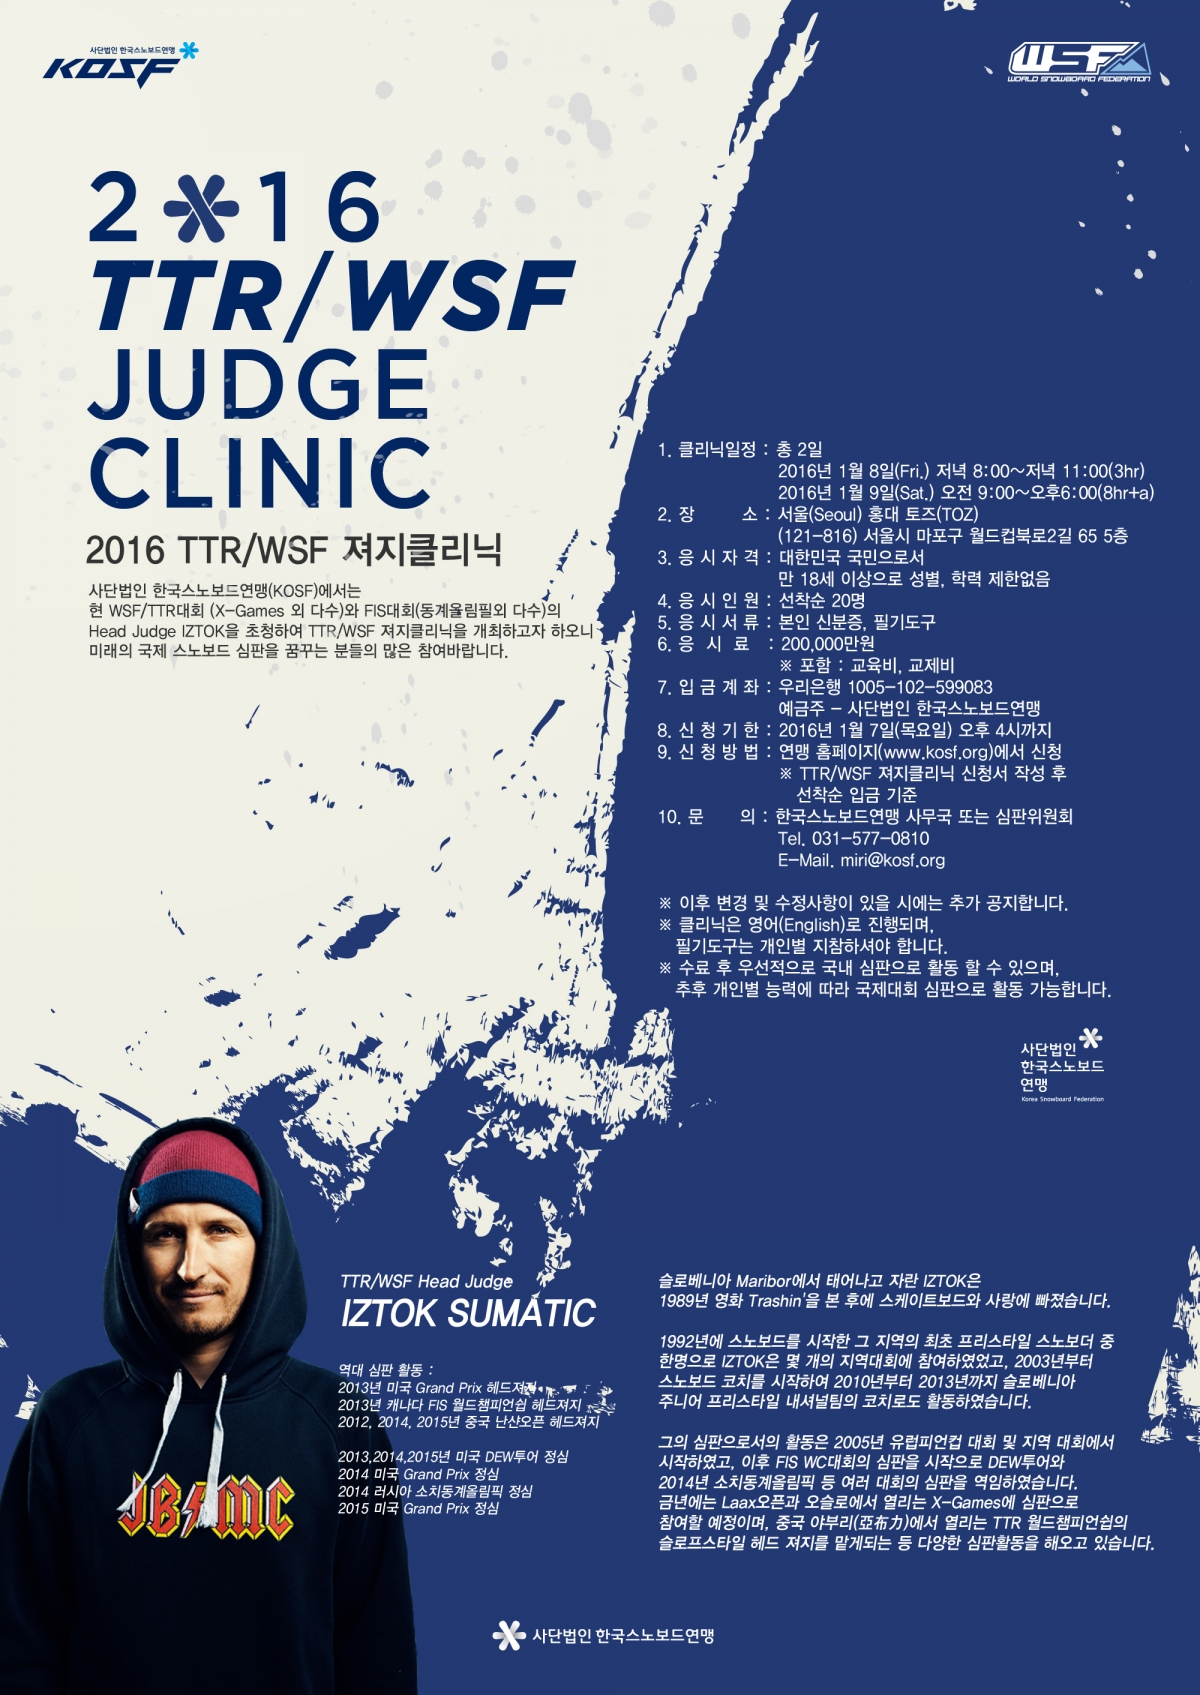 wsf_judge_clinic2016.jpg